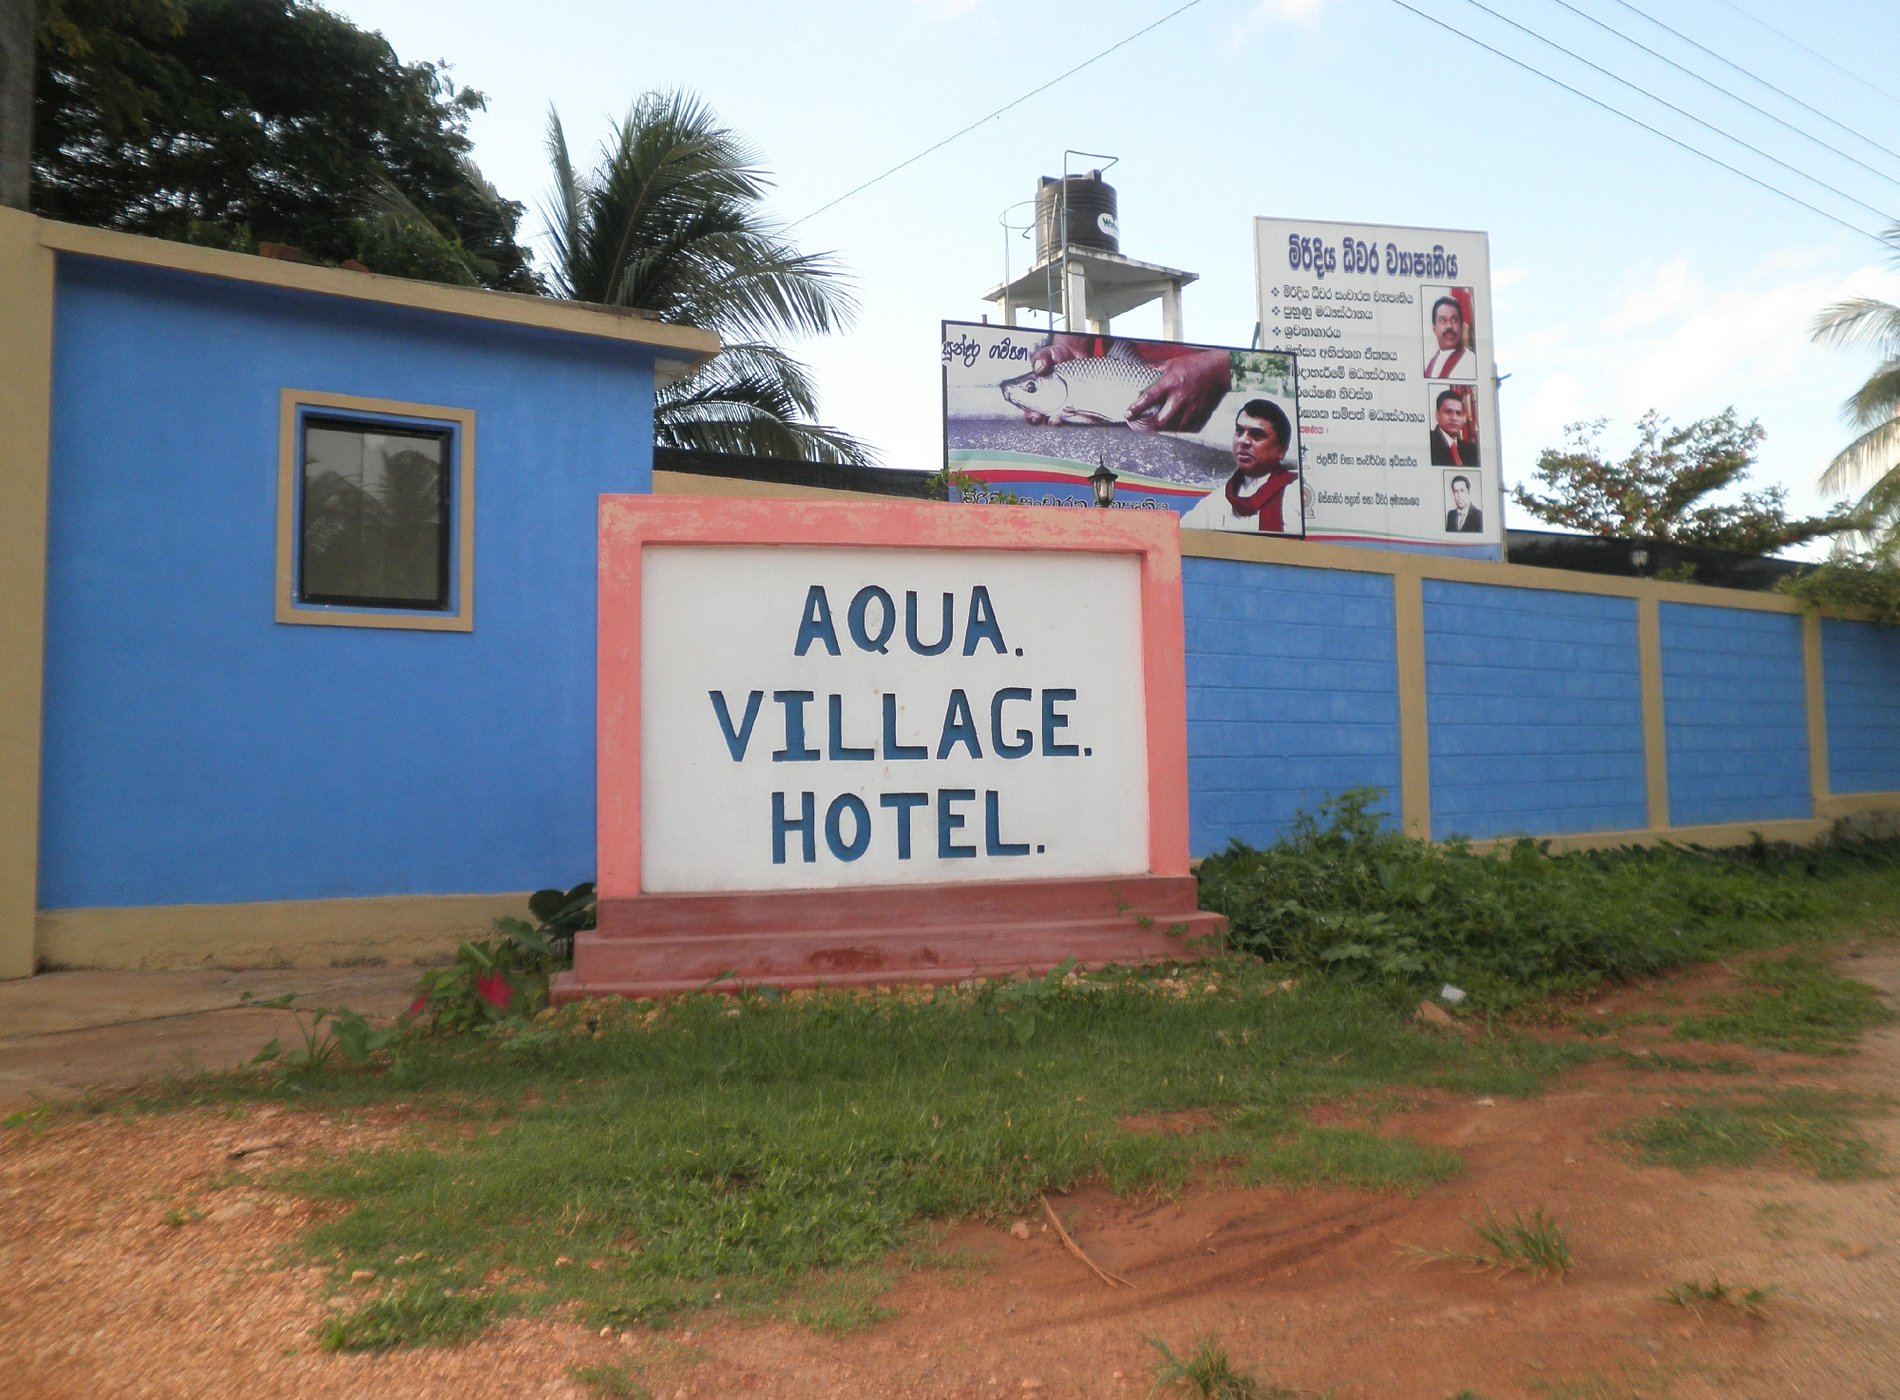 Aqua Village Hotel and Aqua Holdings image